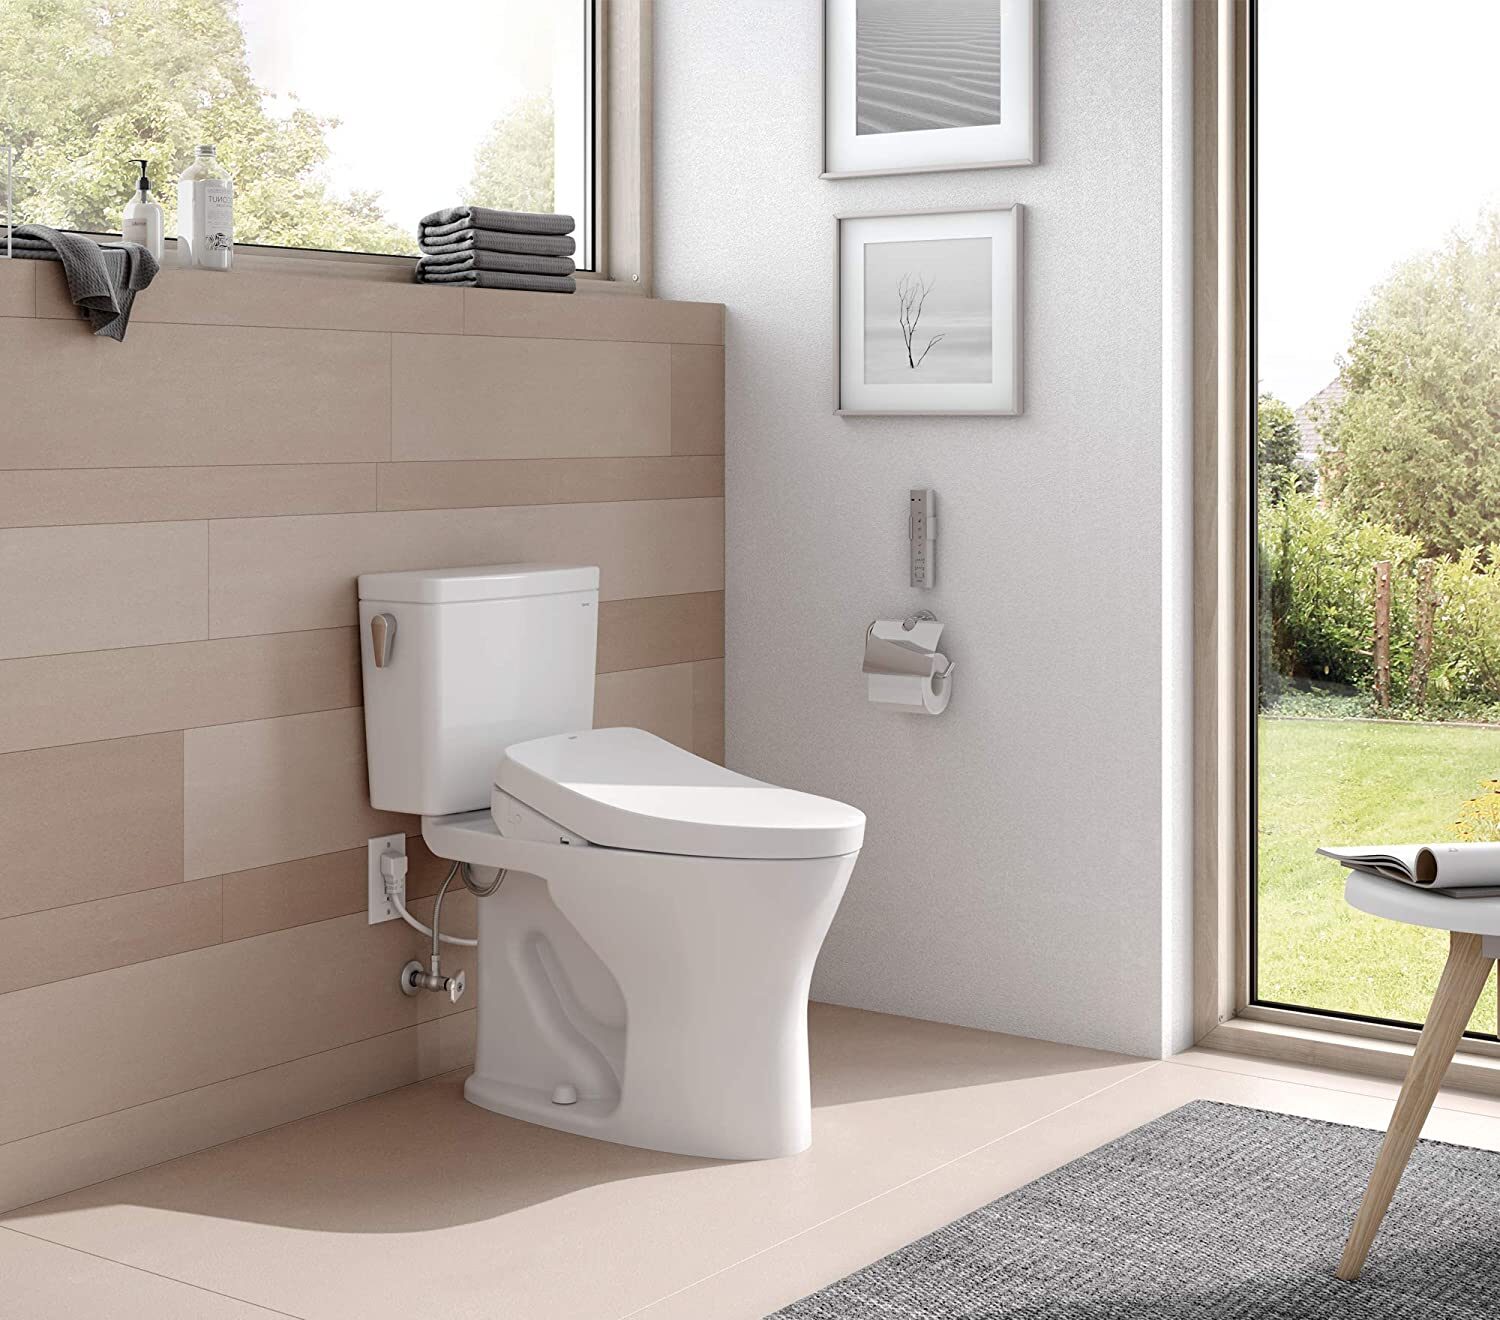 Toto Drake Washlet Low-Flow Toilet in a bathroom